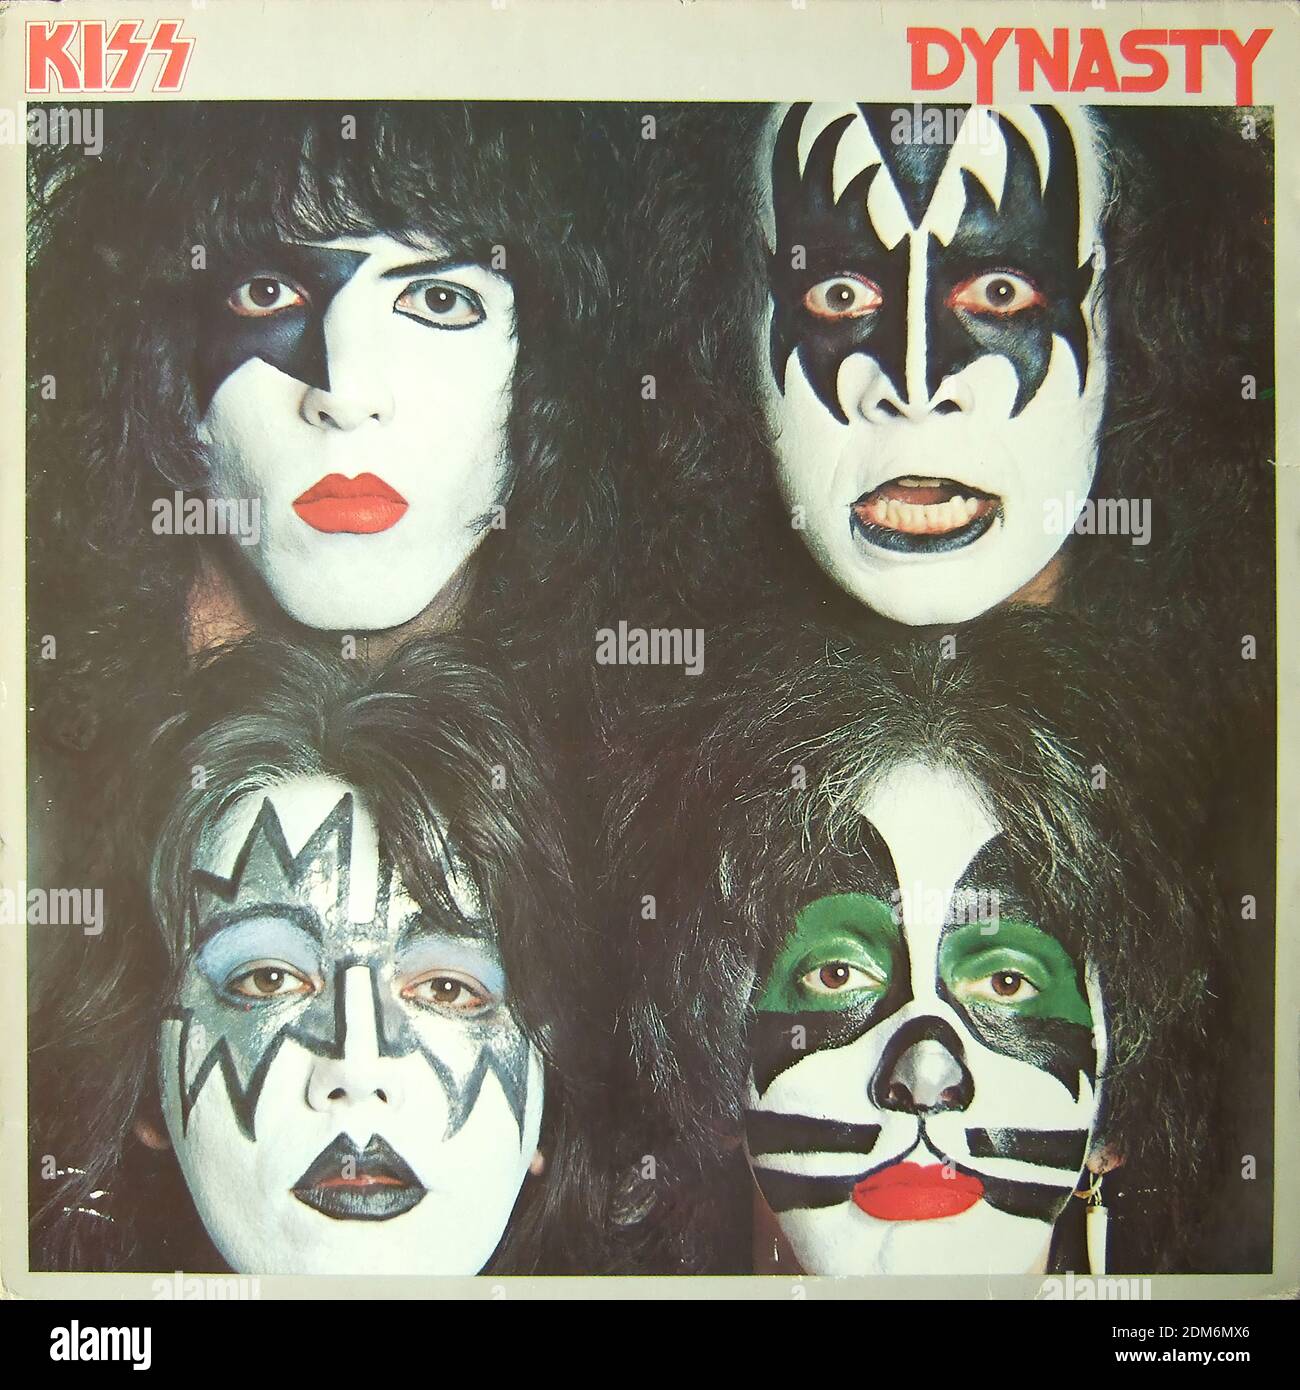 Vintage cover album kiss -Fotos und -Bildmaterial in hoher Auflösung – Alamy